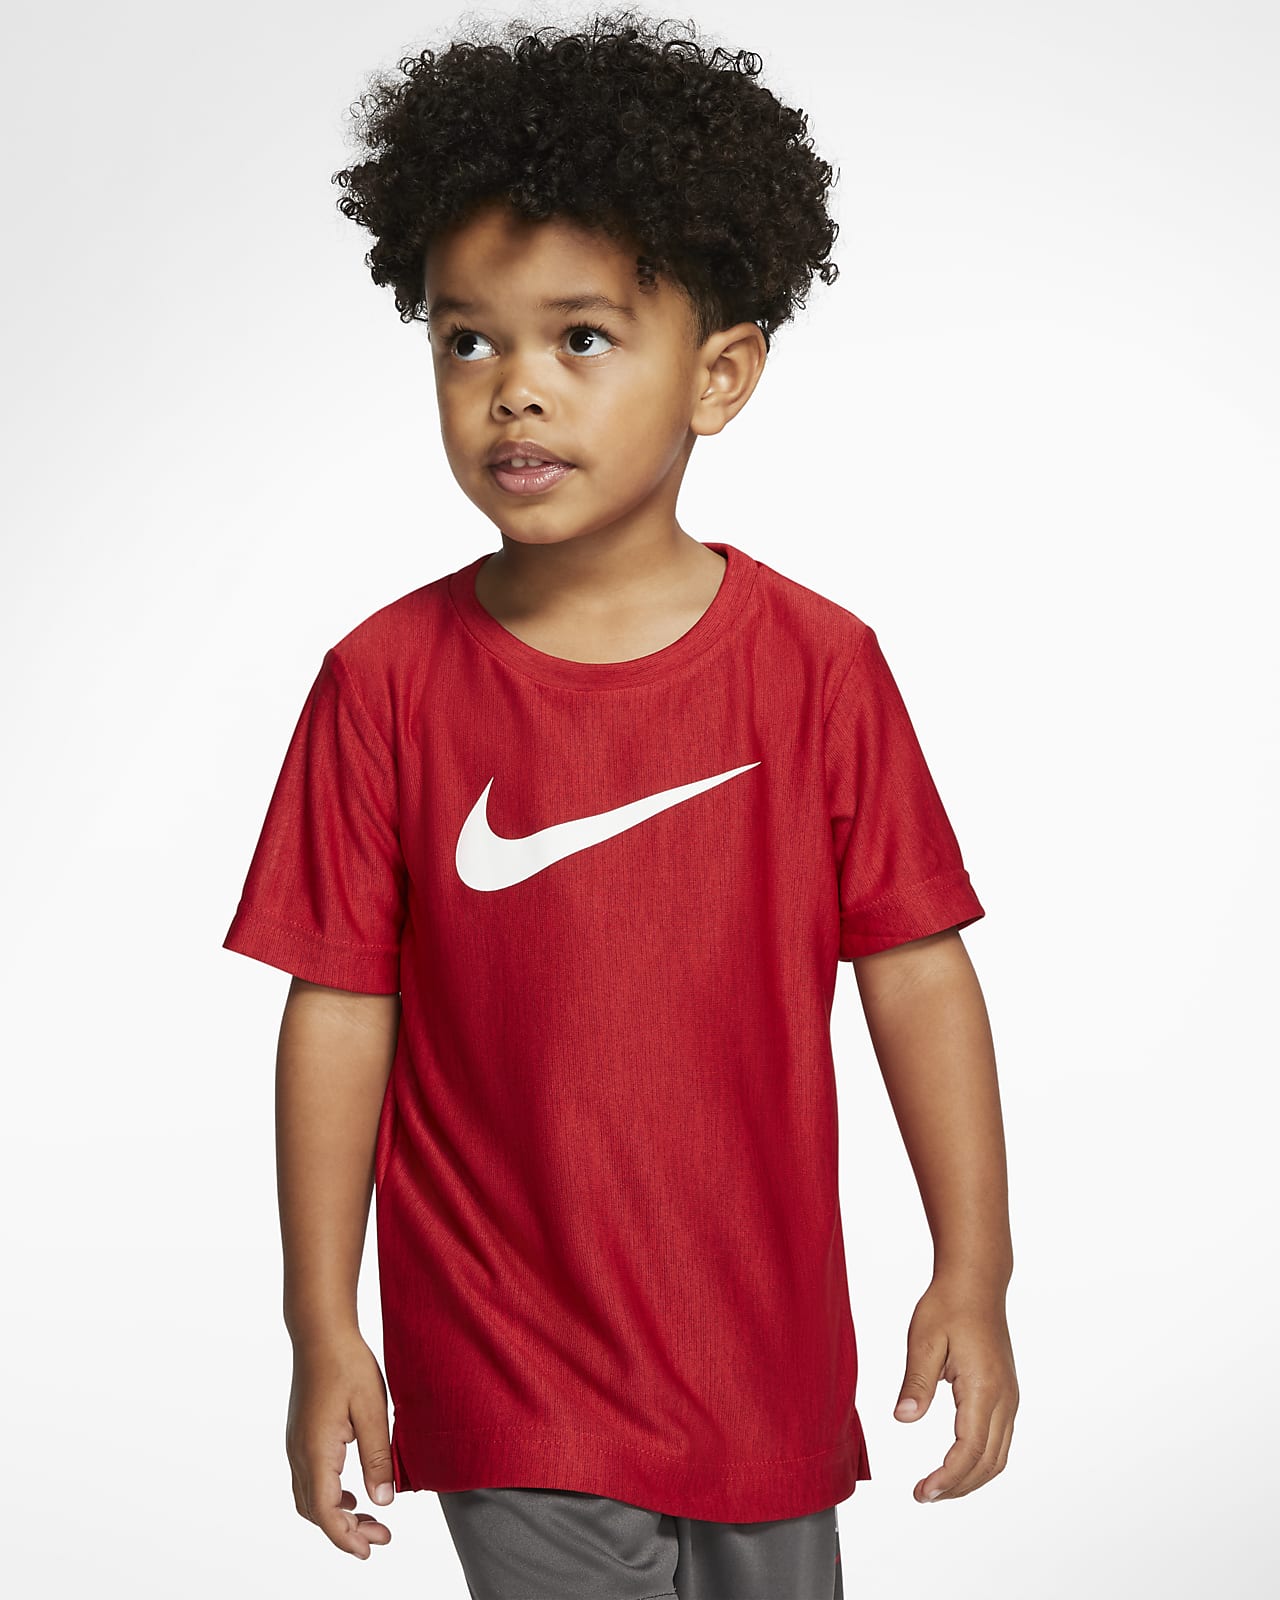 Camiseta Jordan maga corta color rojo niño